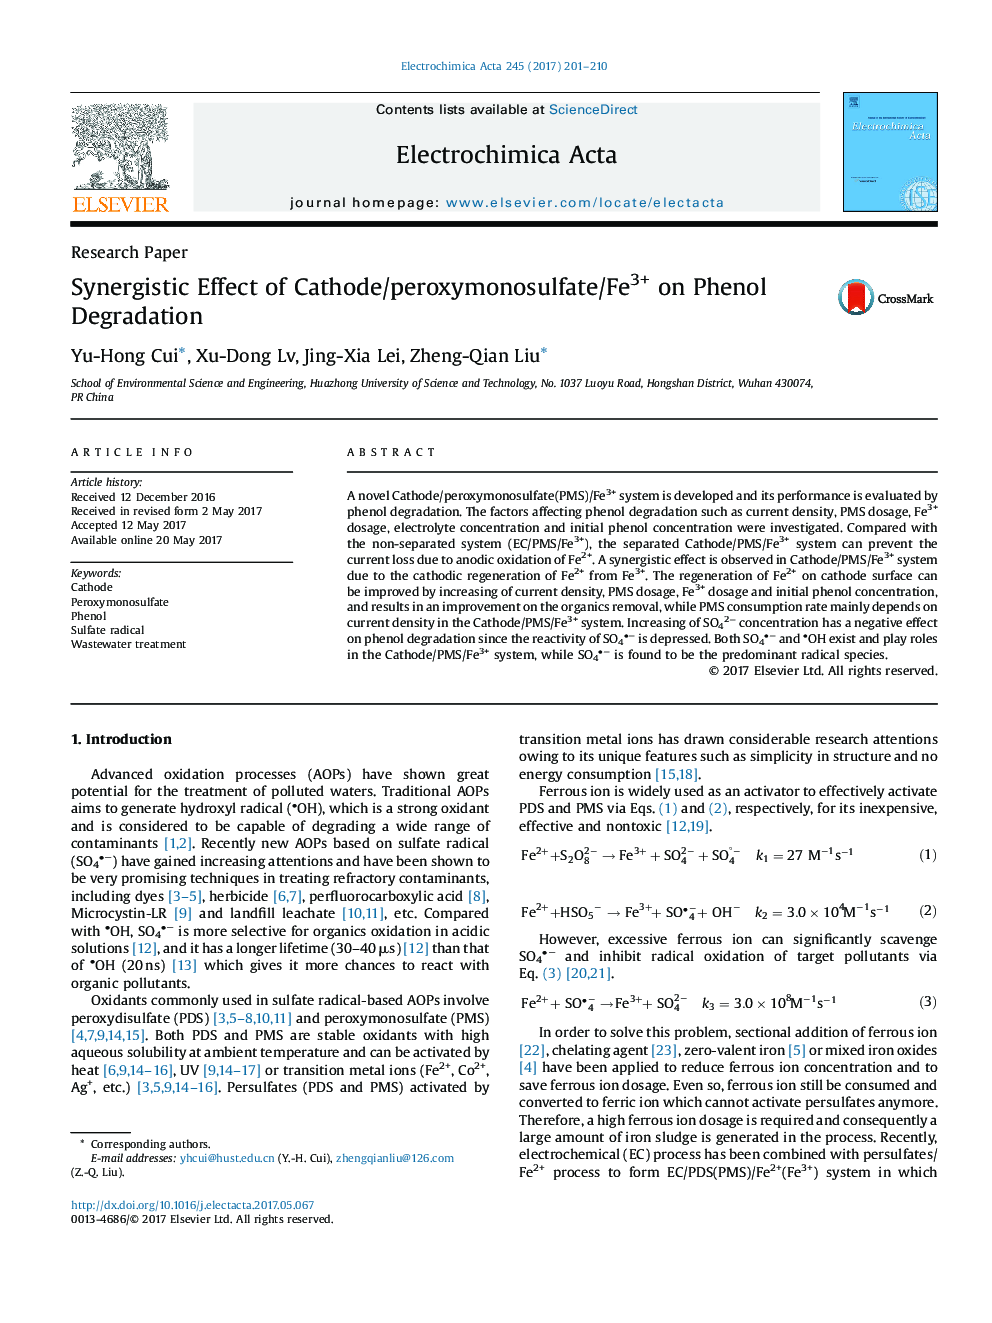 Synergistic Effect of Cathode/peroxymonosulfate/Fe3+ on Phenol Degradation